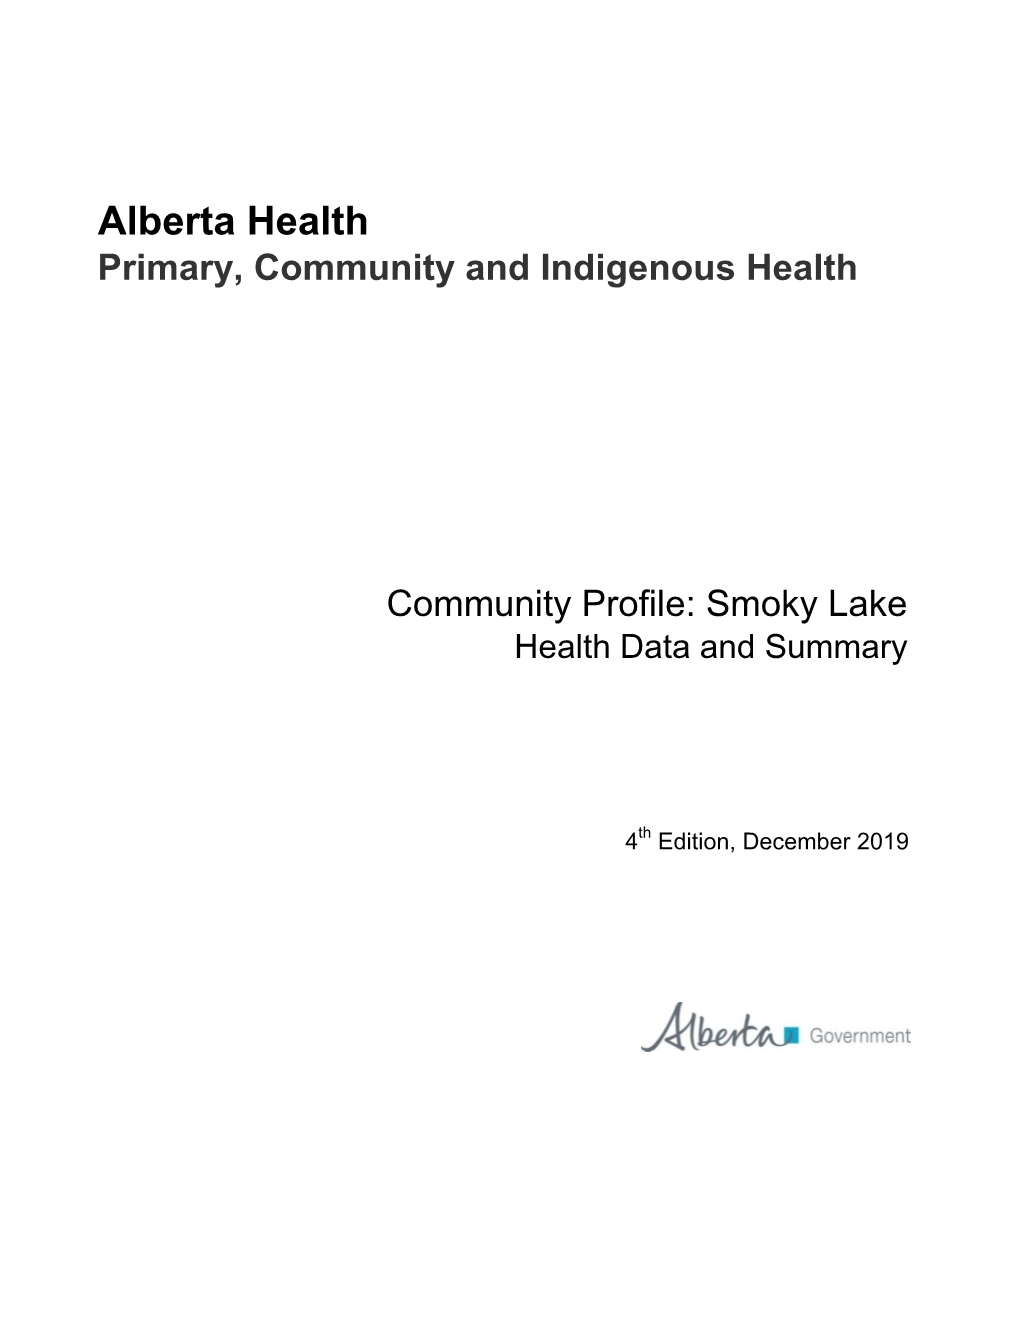 Smoky Lake, Health Data and Summary, 4Th Edition, De